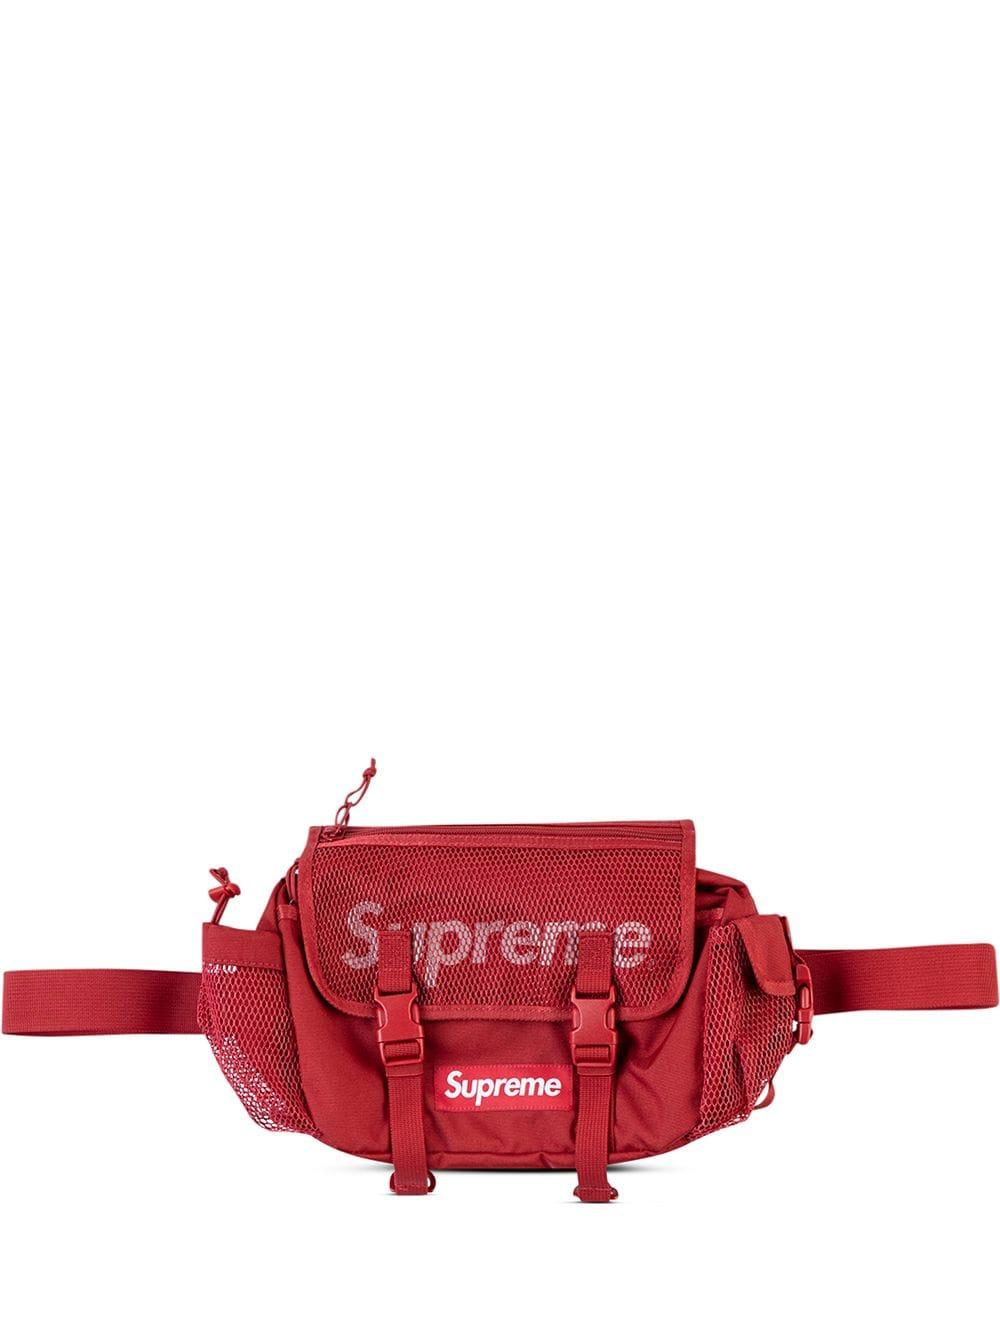 Supreme Waist Bag Ss16 Cheapest Order, Save 60% | jlcatj.gob.mx